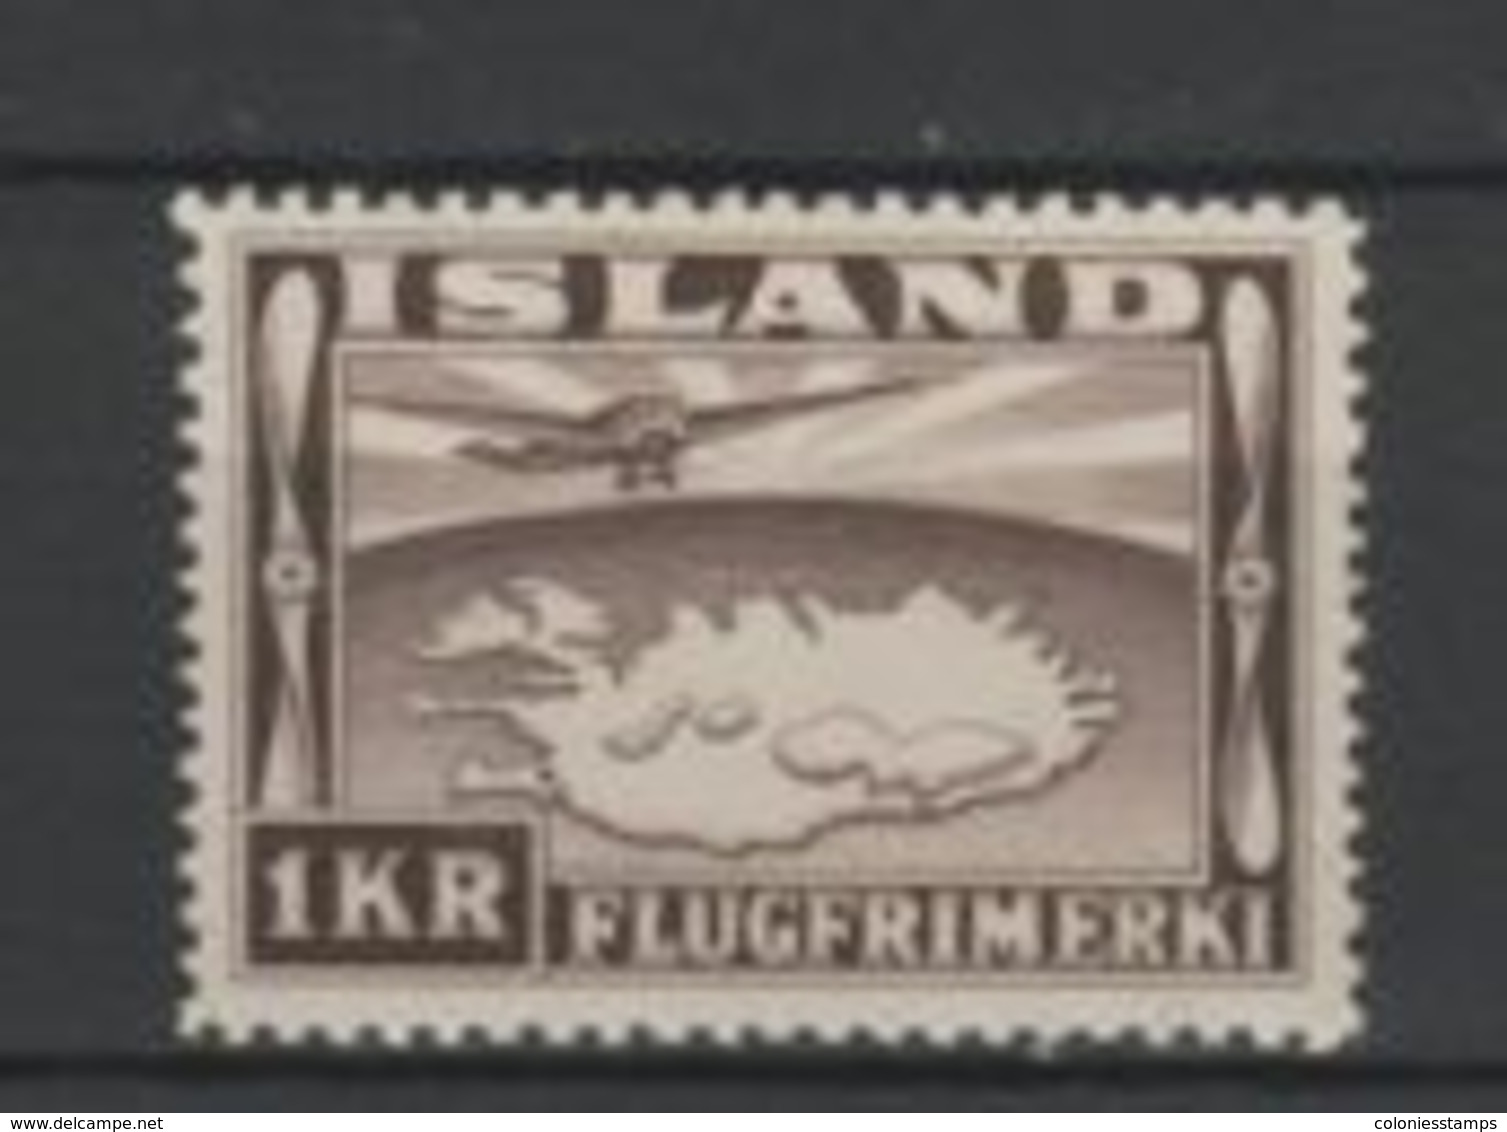 (SA0553) ICELAND, 1934 (Air Post. Plane Map Of Iceland, 1Kr., Dark Brown). Mi # 179B (perf. 12½:14). MNH** Stamp - Poste Aérienne